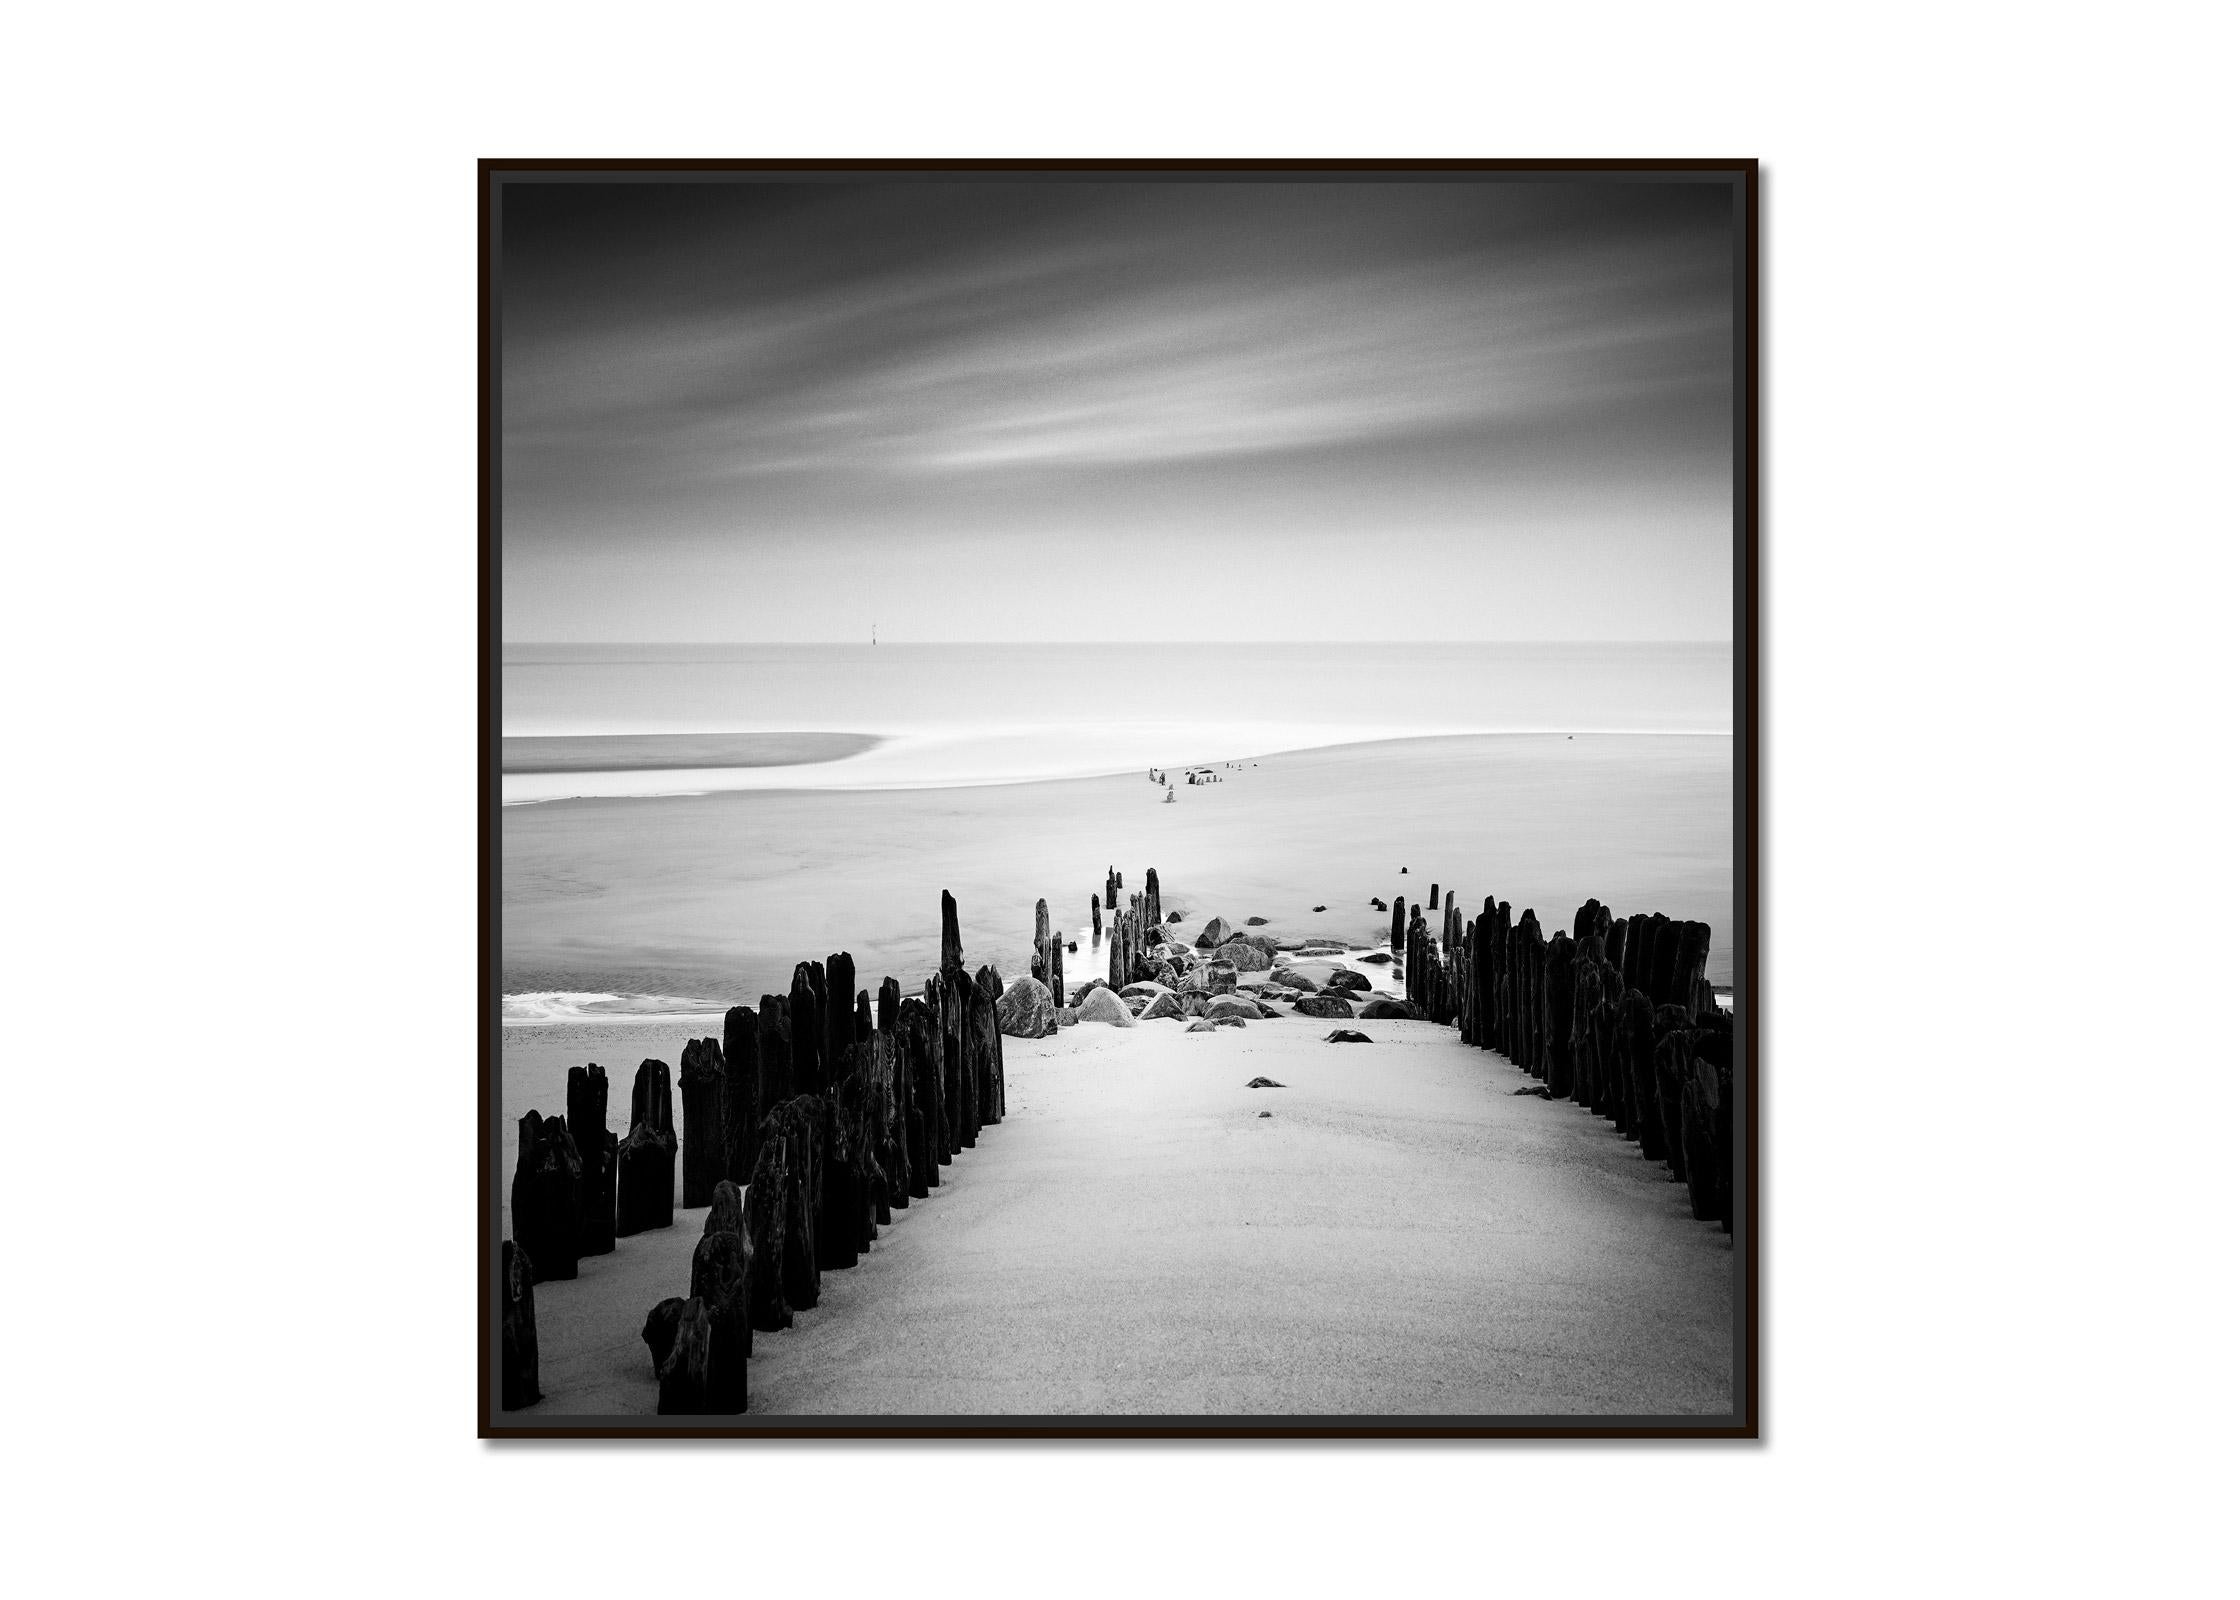 Groyne, Wavebreaker, Beach, Sylt, Germany, black & white waterscape photo print - Photograph by Gerald Berghammer